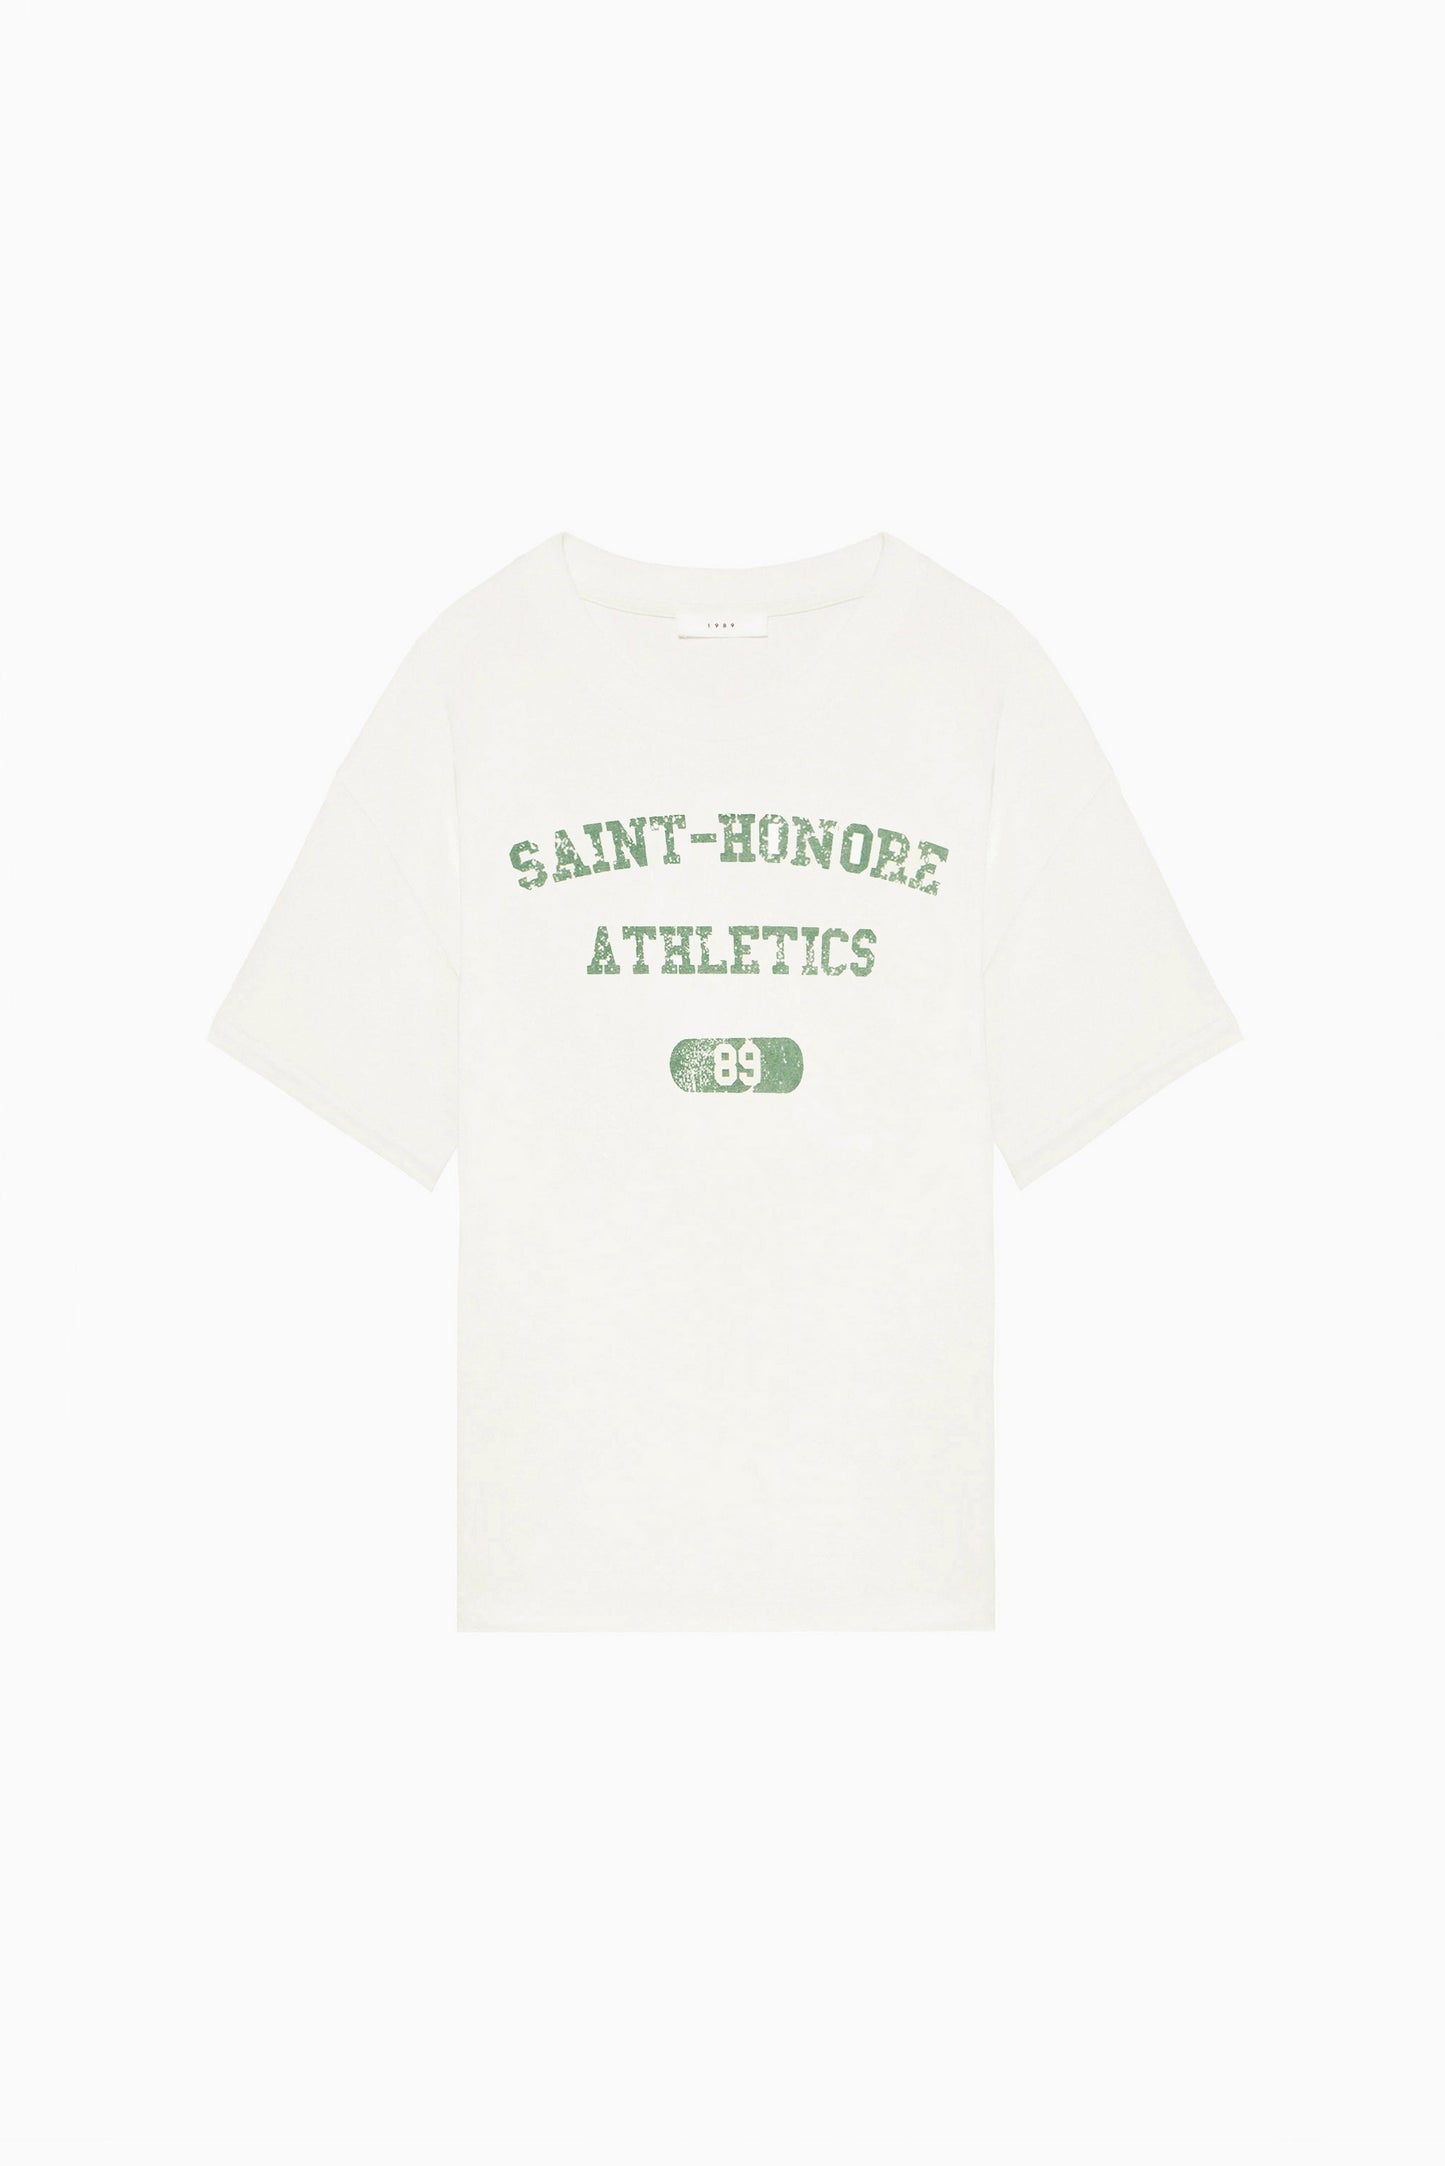 Woman's Saint Honore Athletics T-Shirt